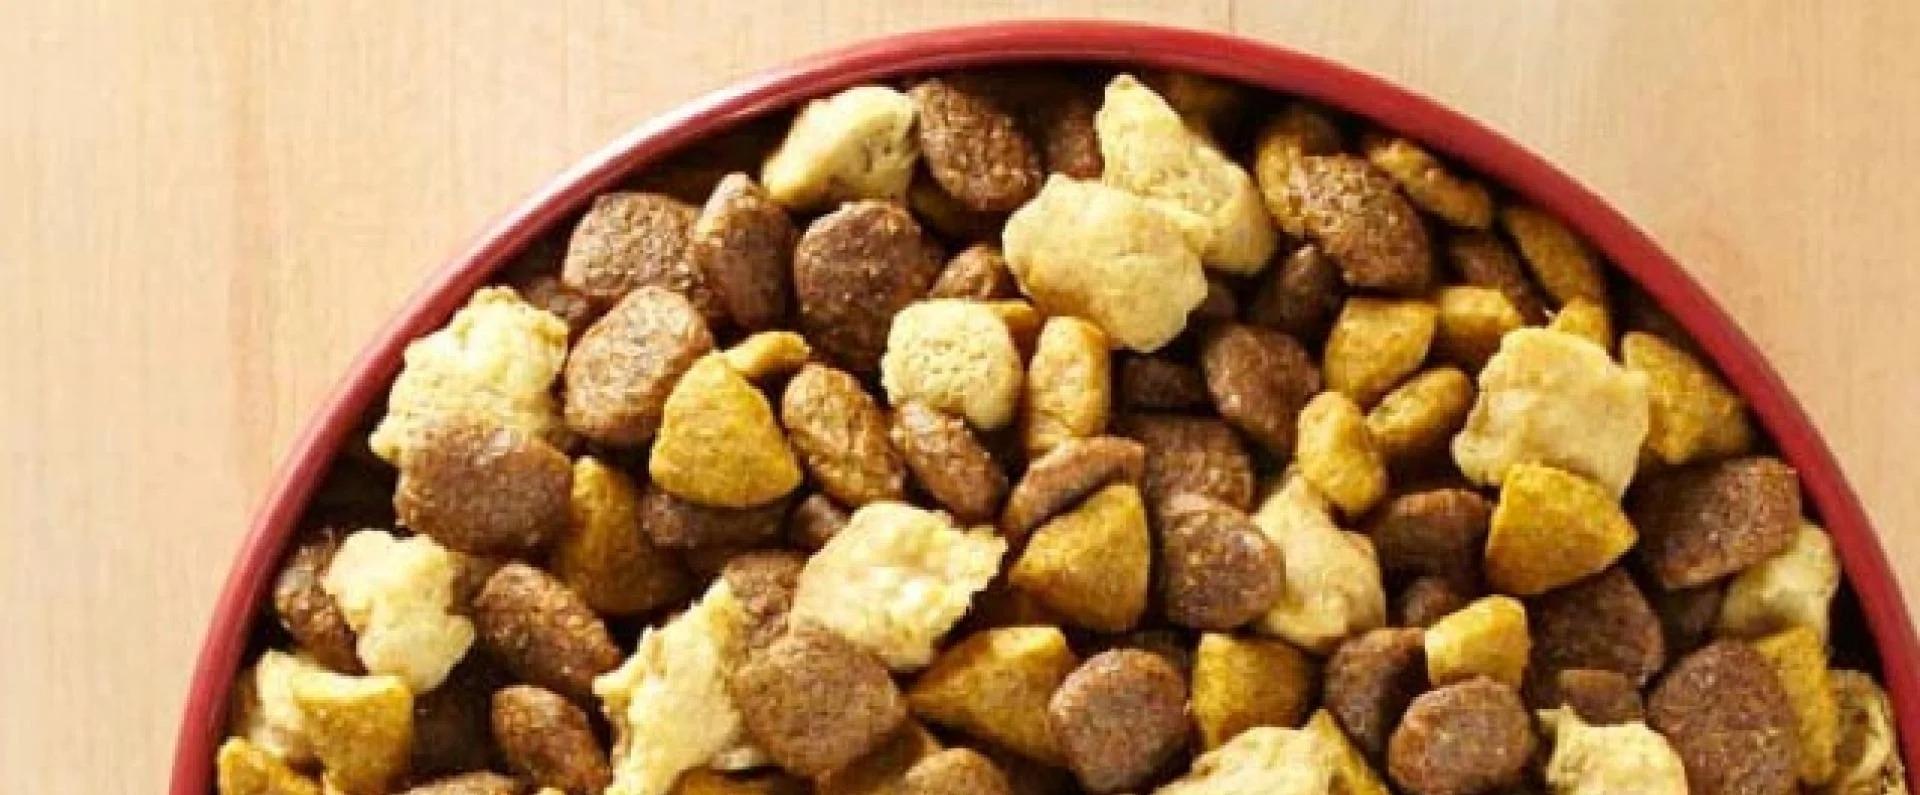 Close up of bowl of dog food